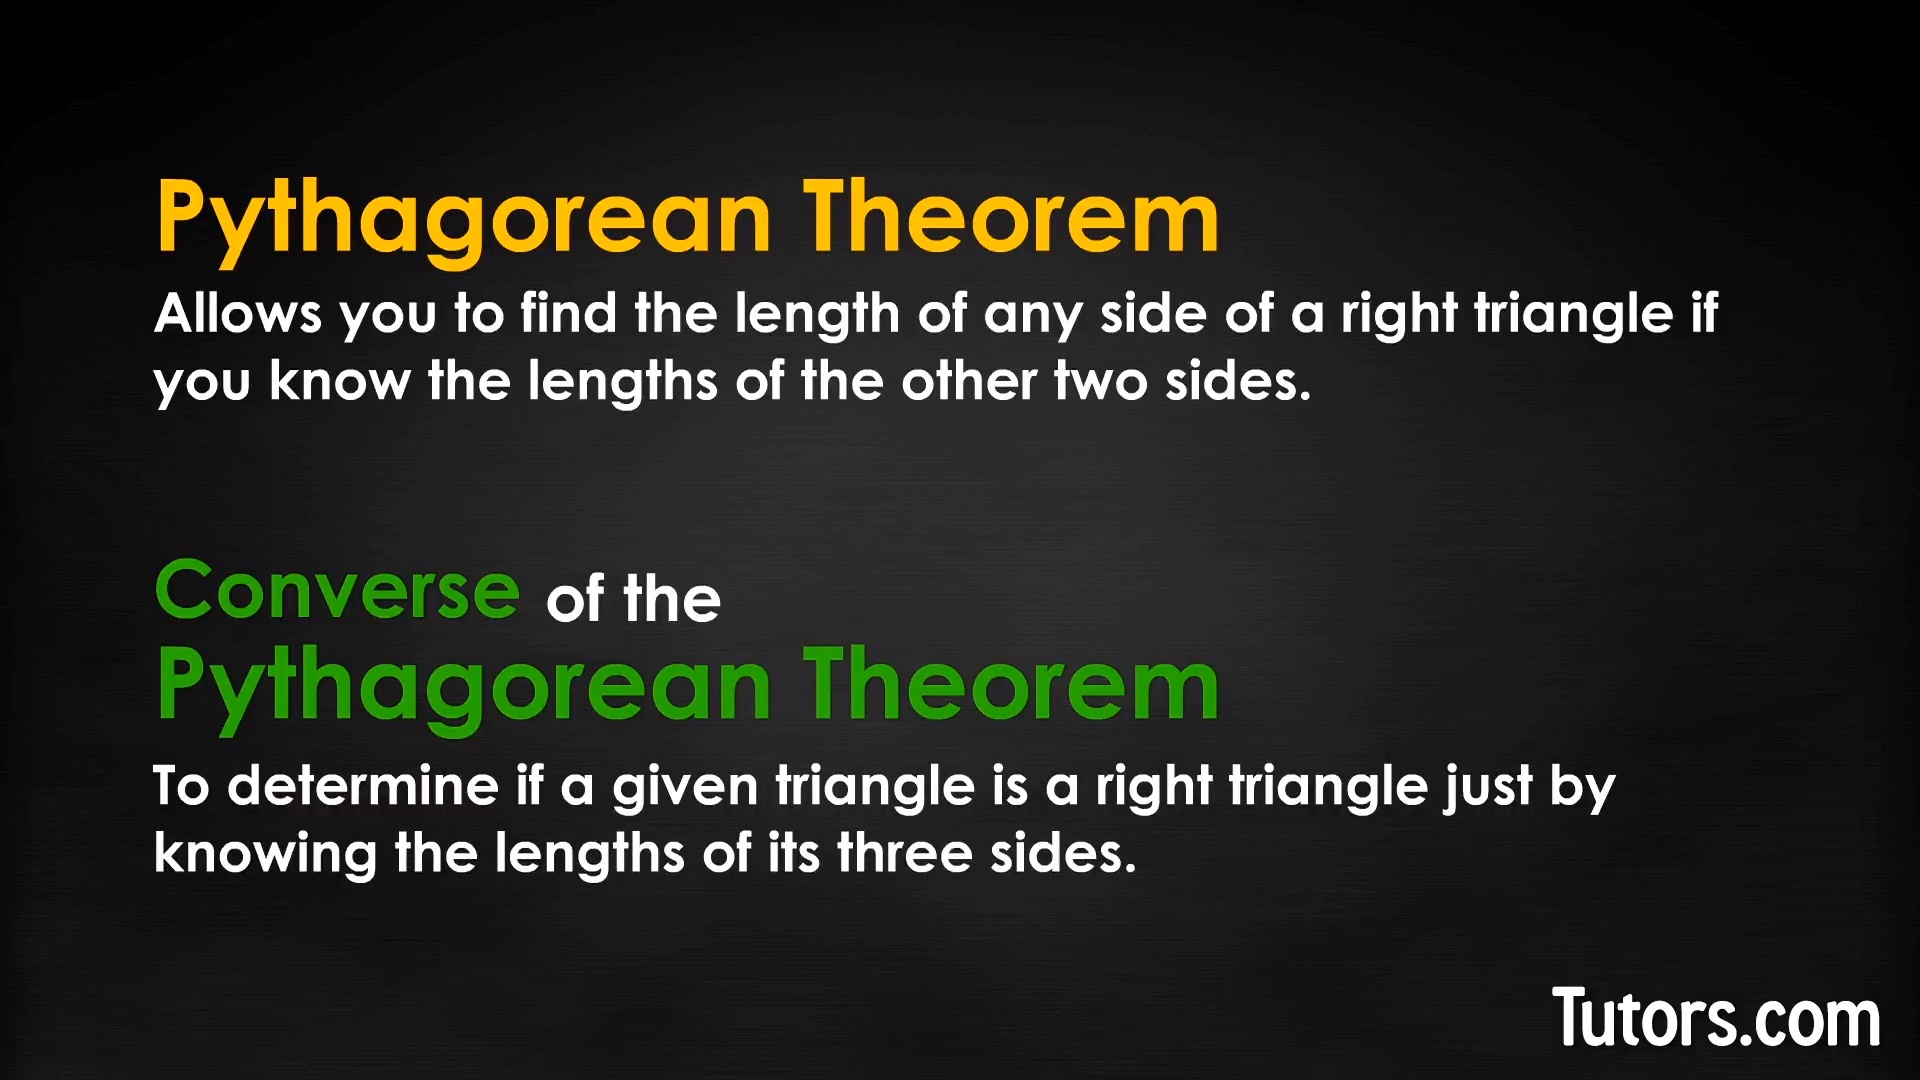 Converse of the Pythagorean Theorem 